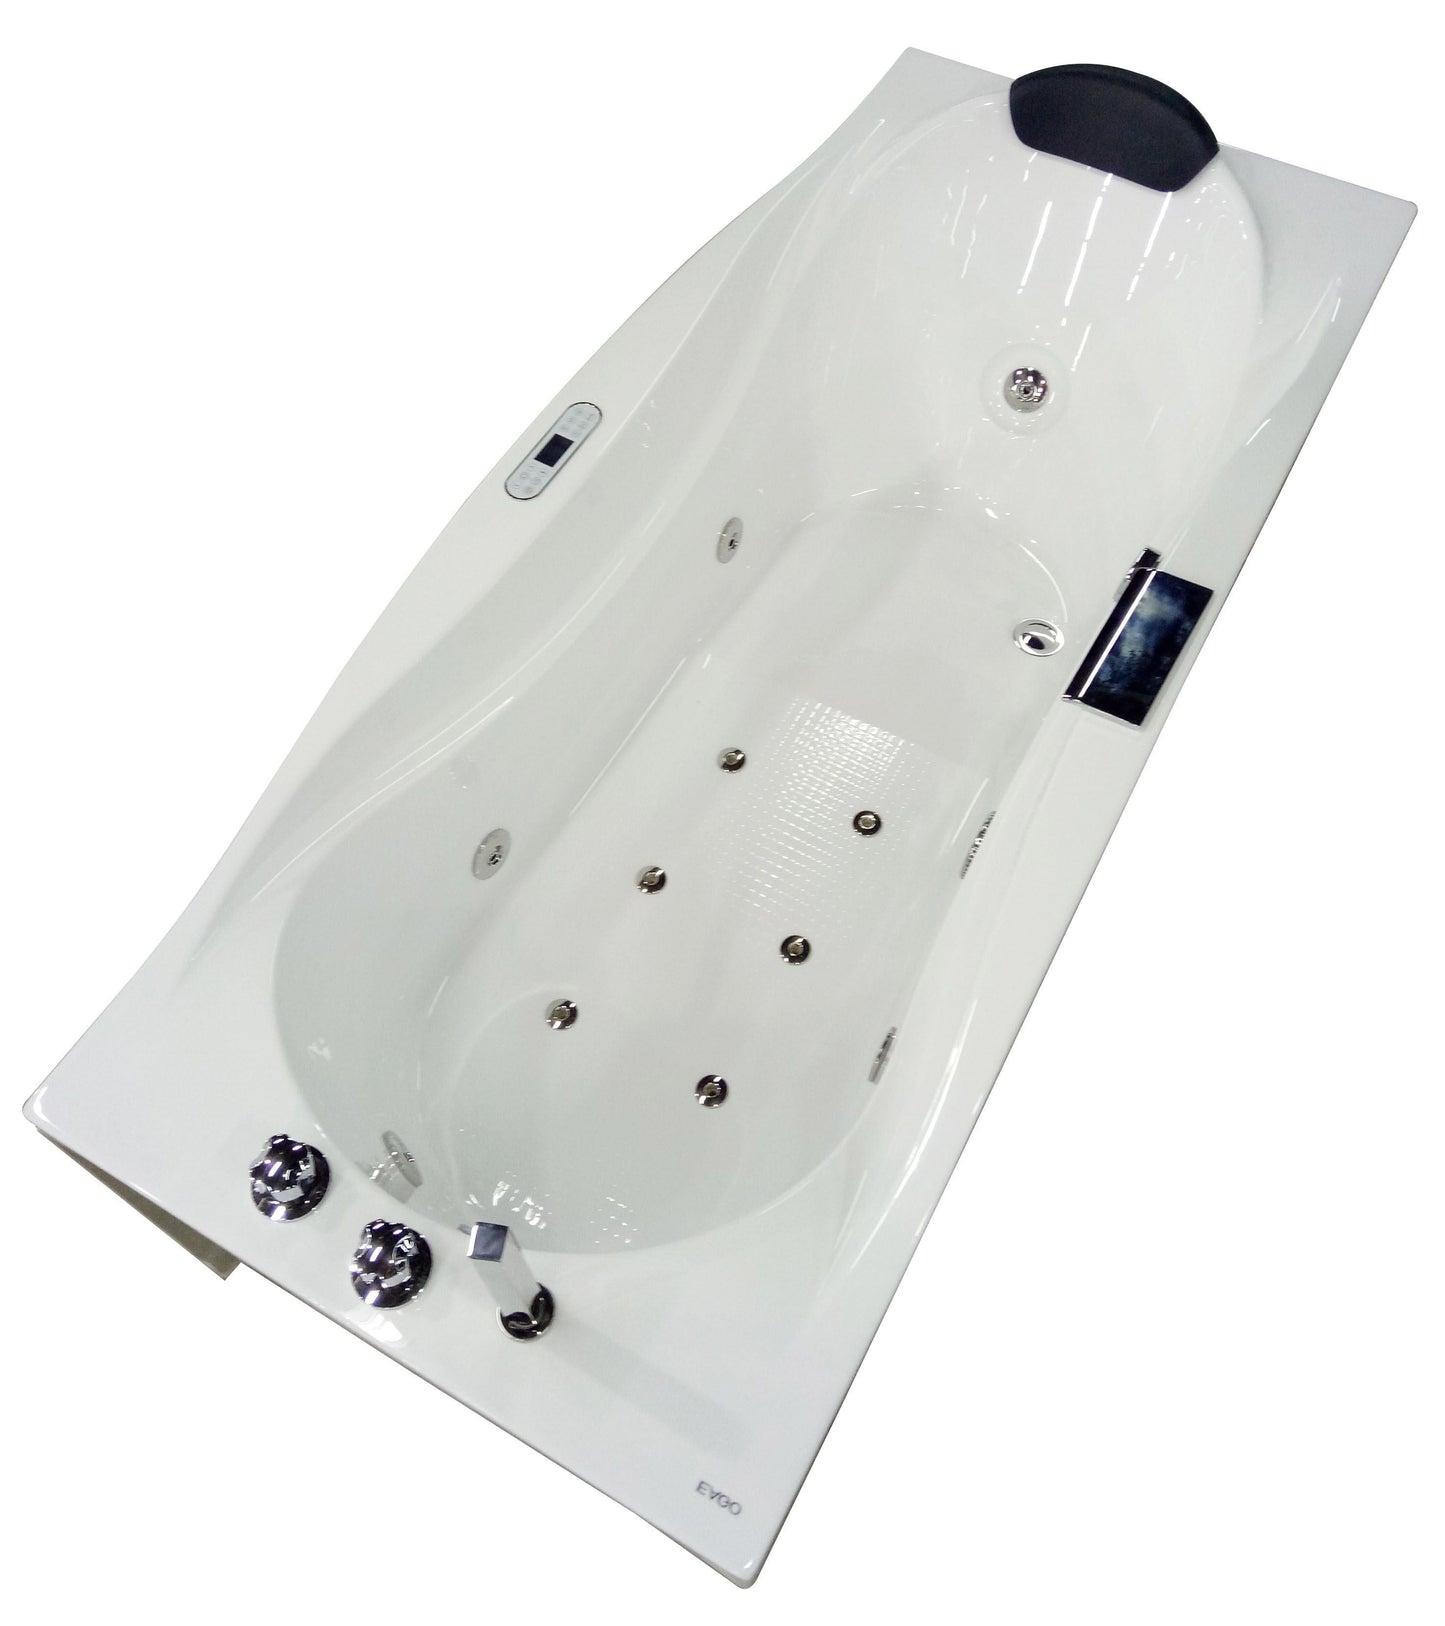 EAGO AM189ETL-R 6 ft Right Drain Acrylic White Whirlpool Bathtub w/ Fixtures